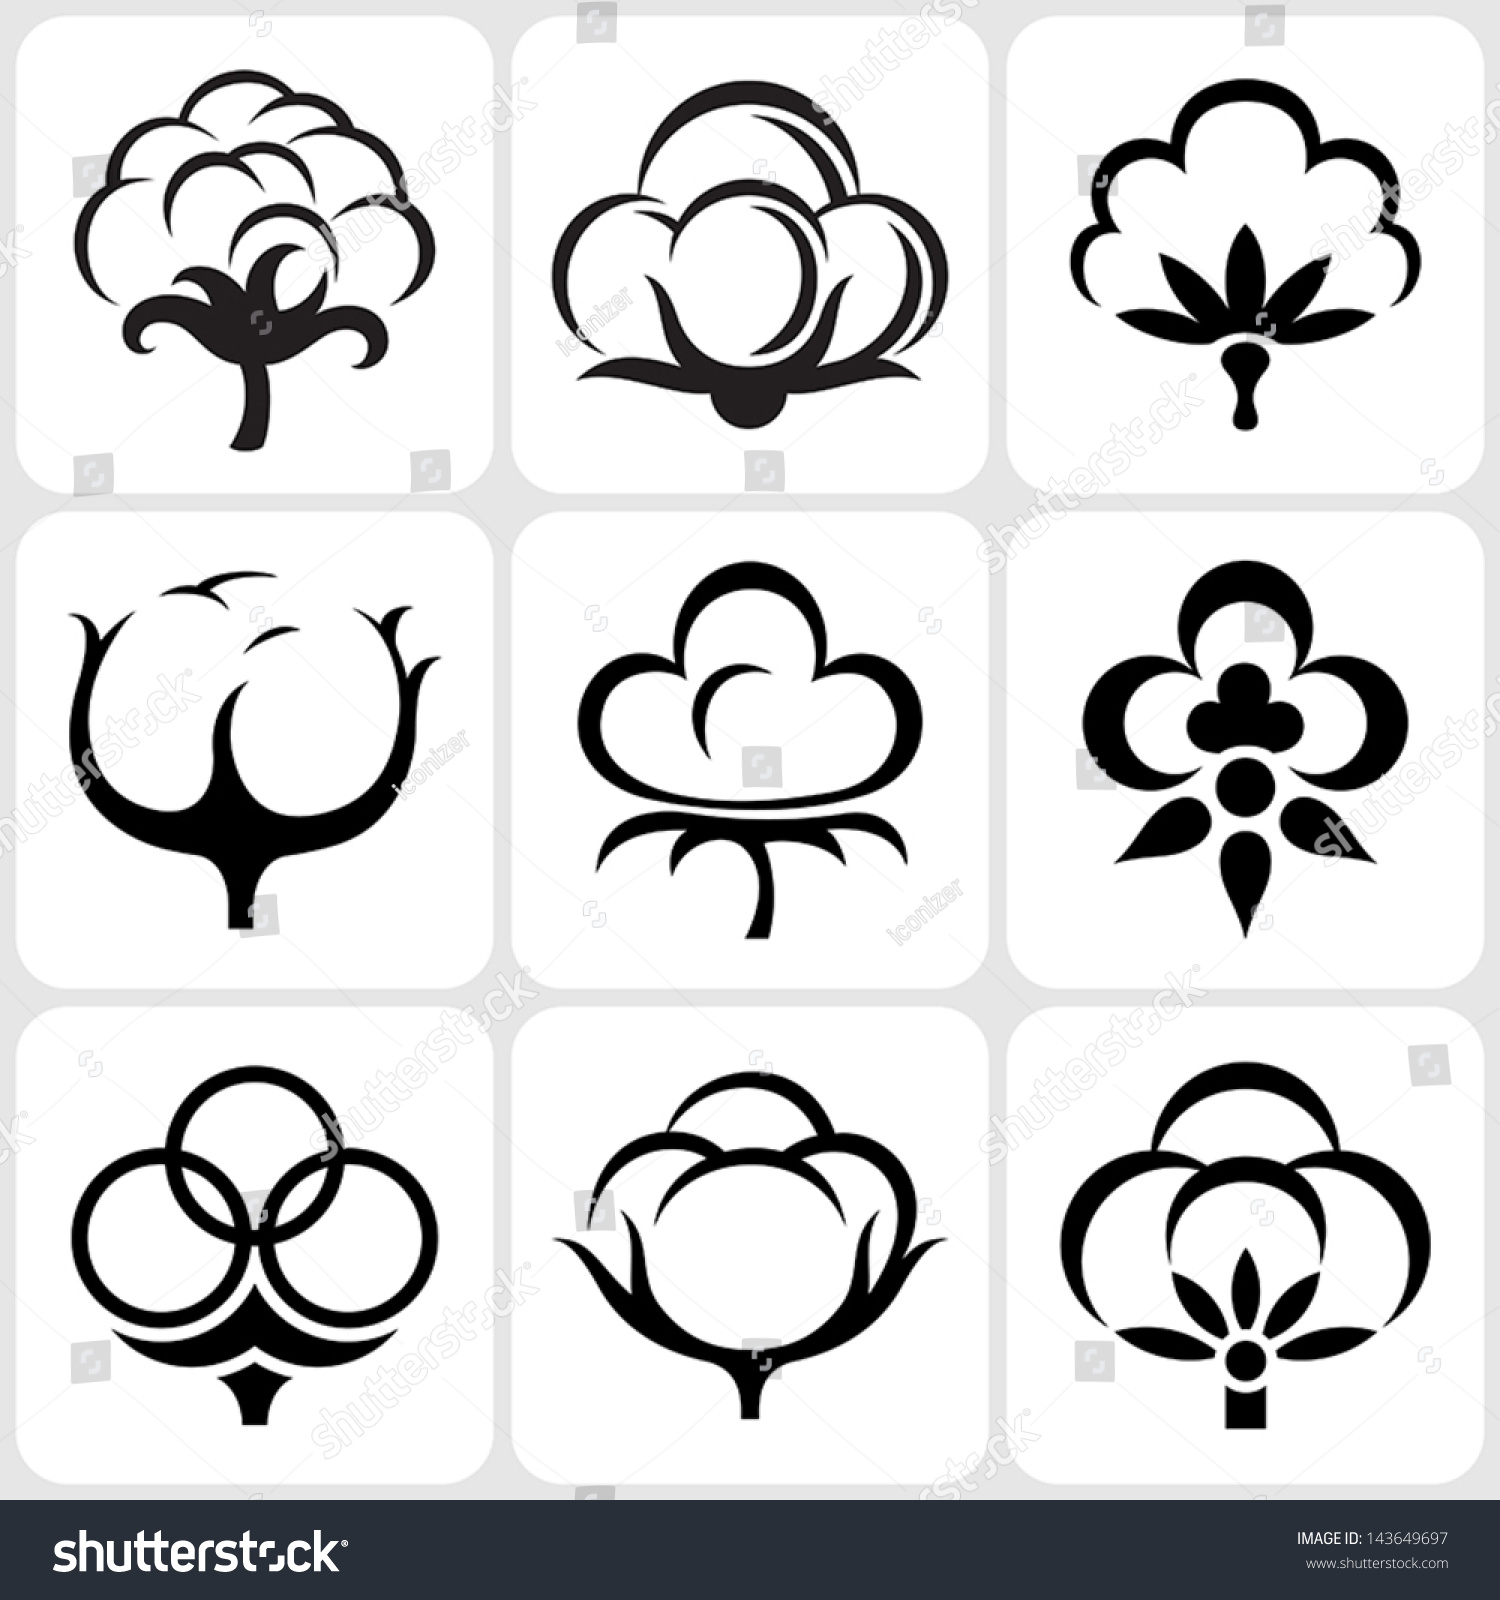 Cotton Icons Set Stock Vector Illustration 143649697 : Shutterstock